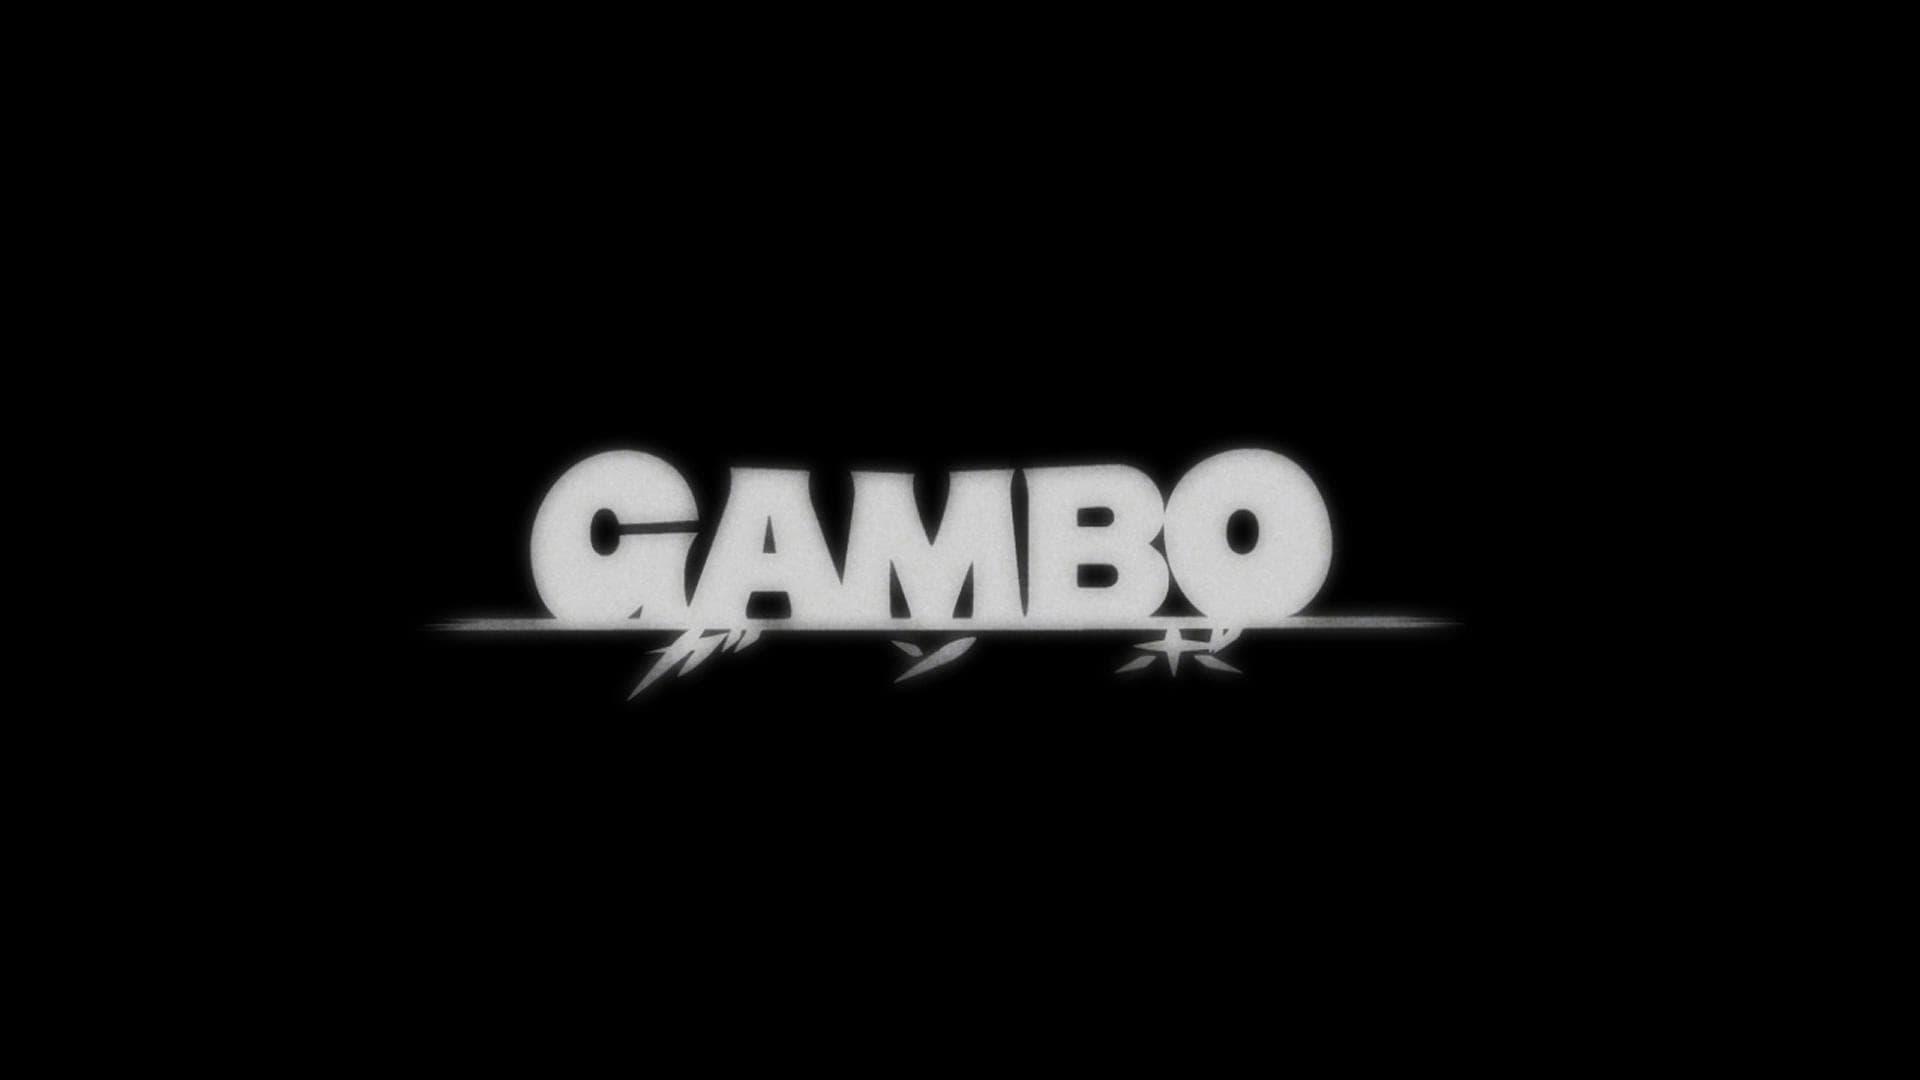 GAMBO backdrop